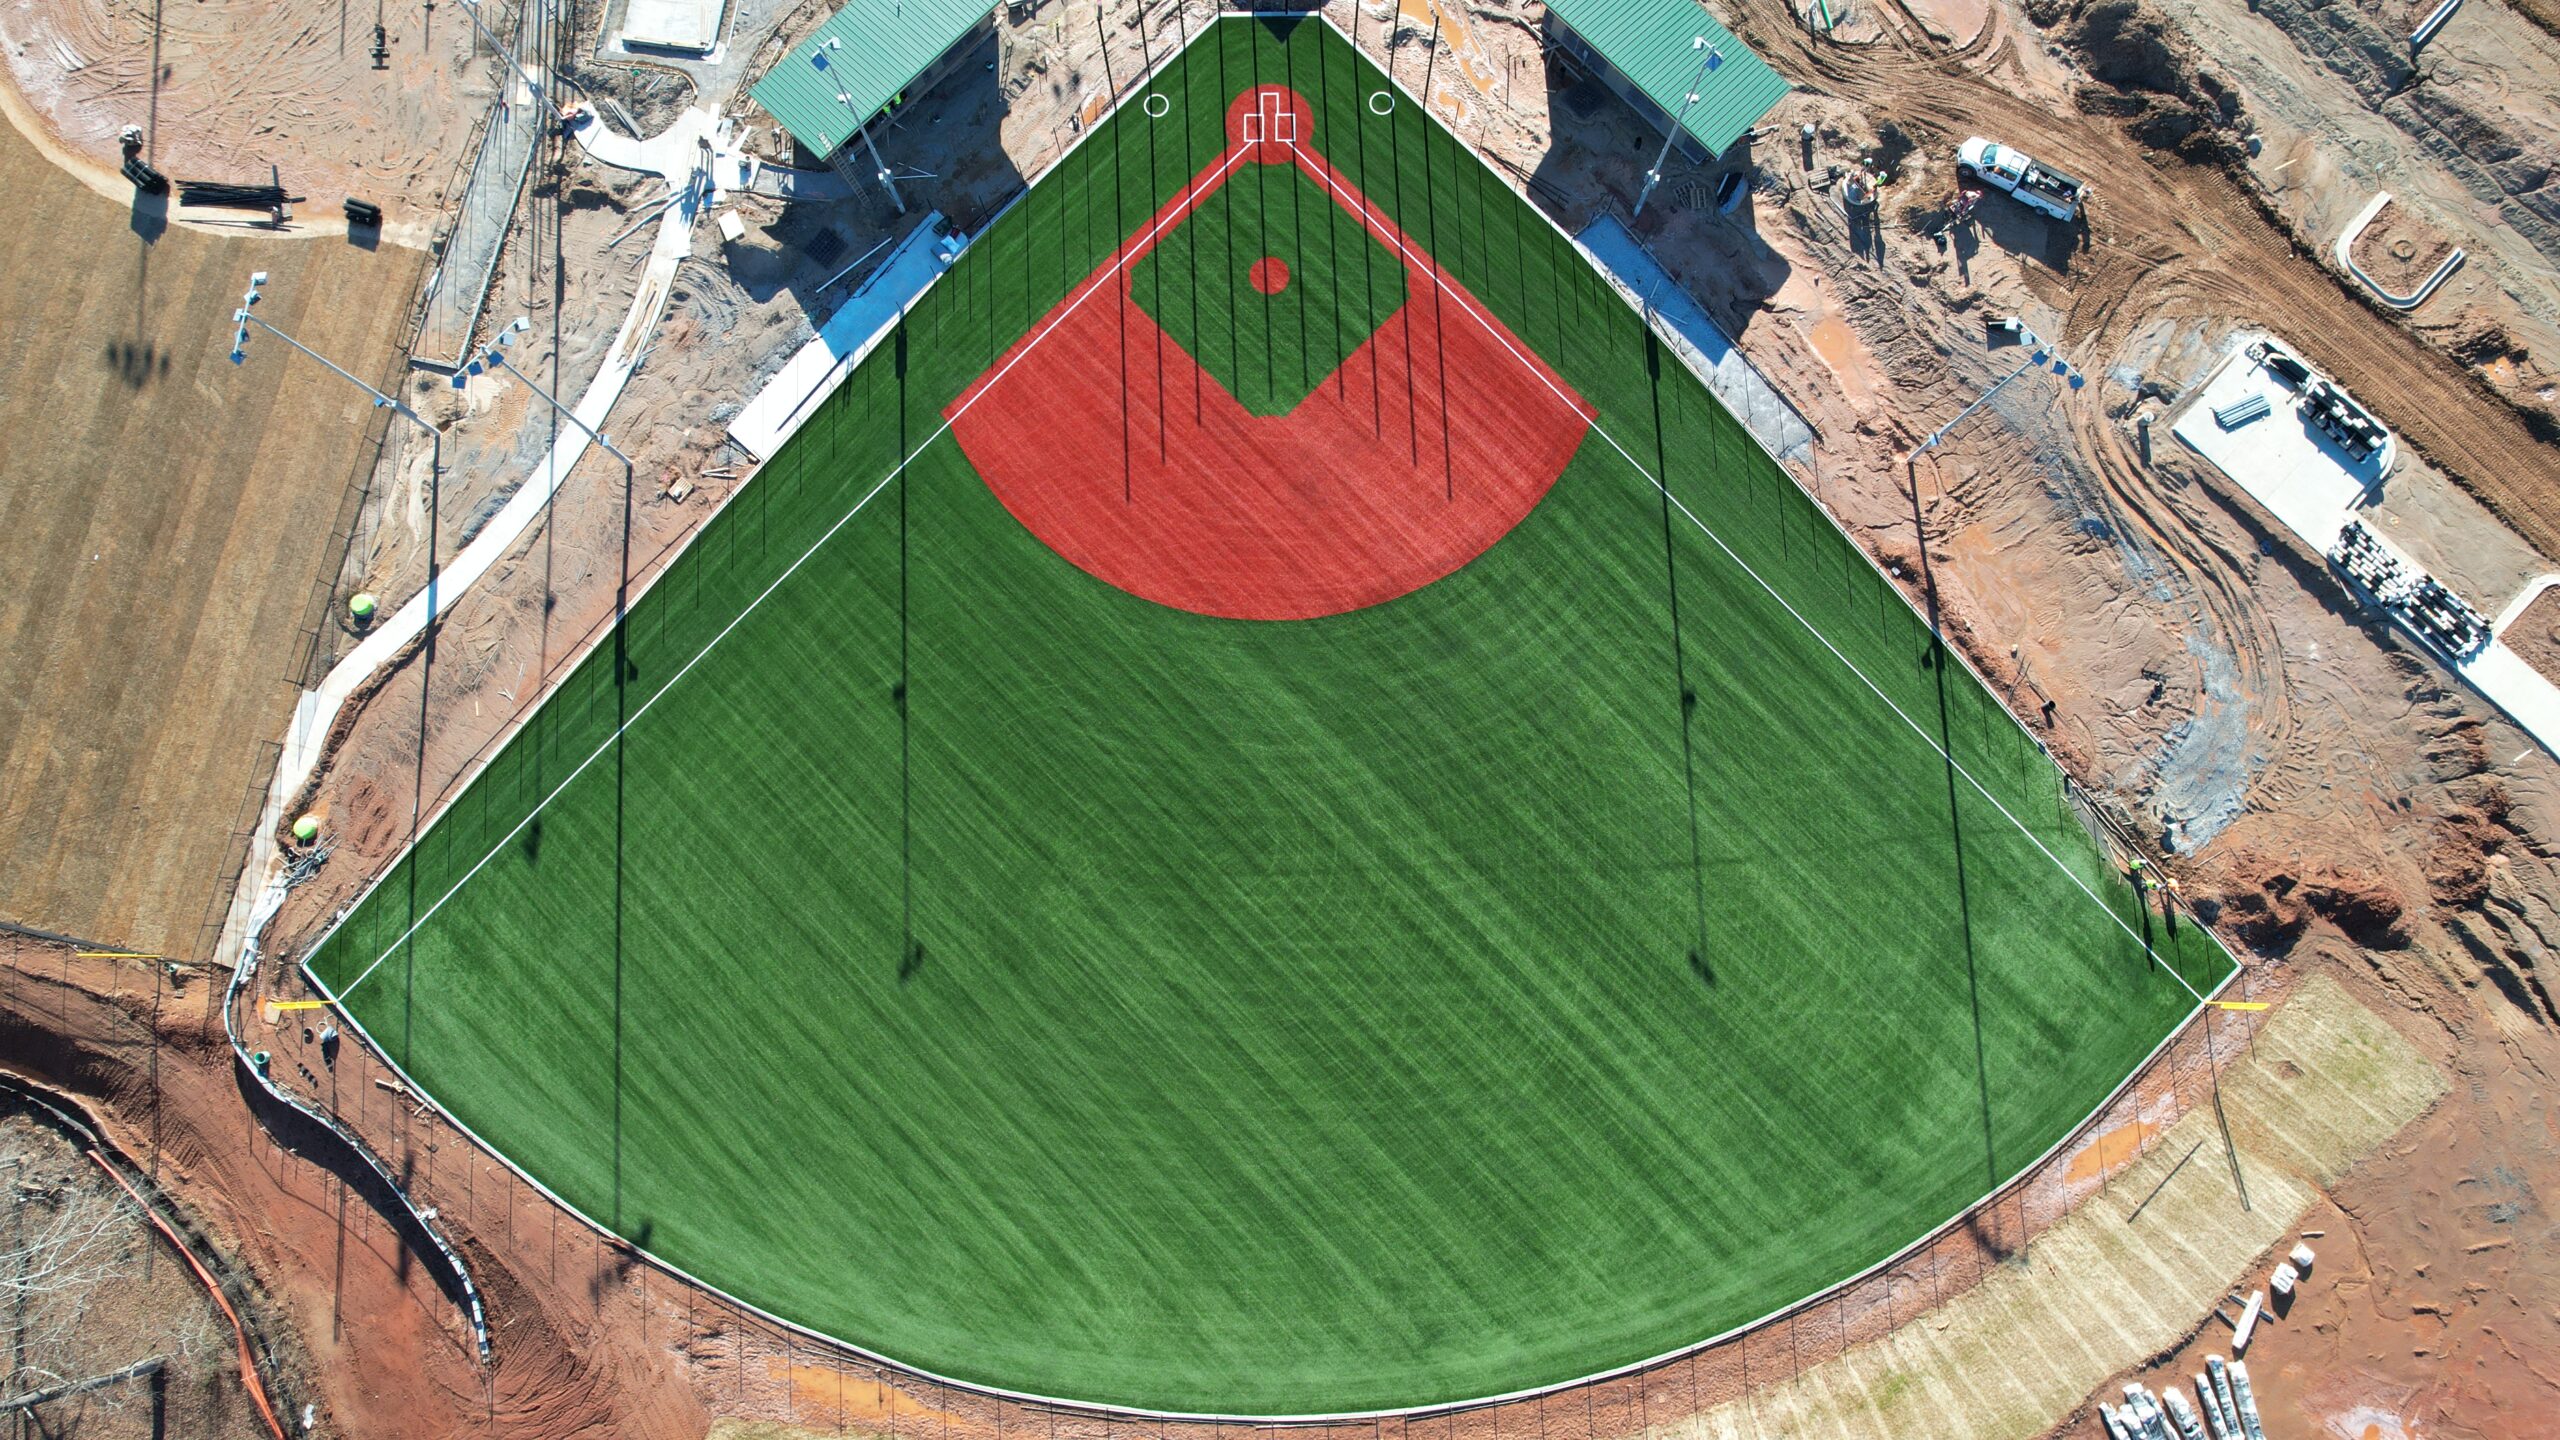 Lanierland Park Adaptive Play Field